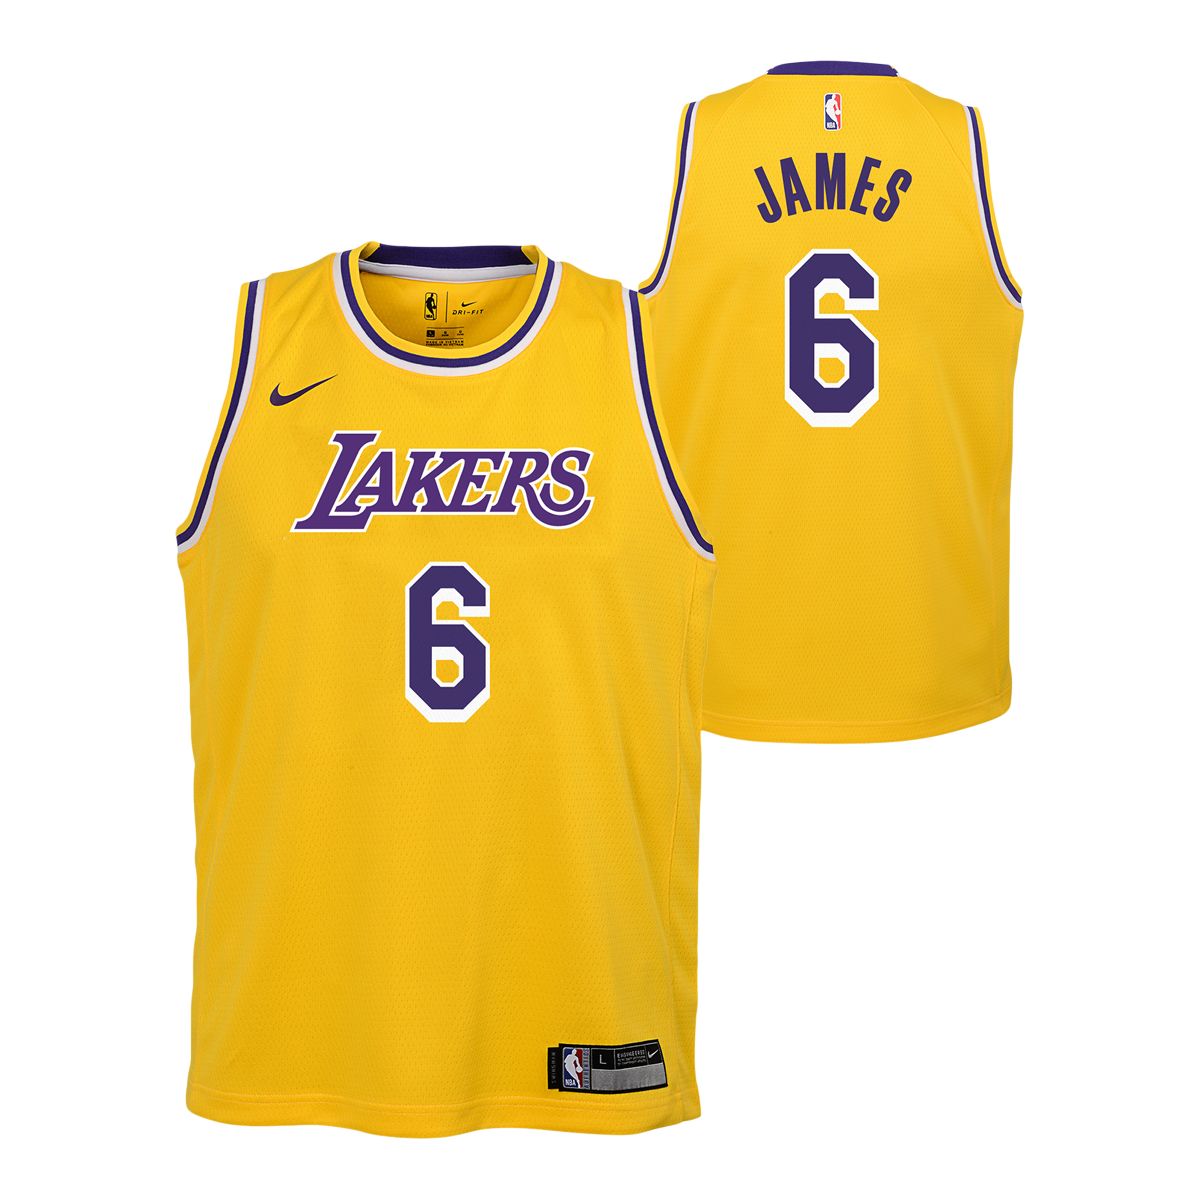 Nike Basketball NBA LA Lakers Lebron James jersey unisex vest in